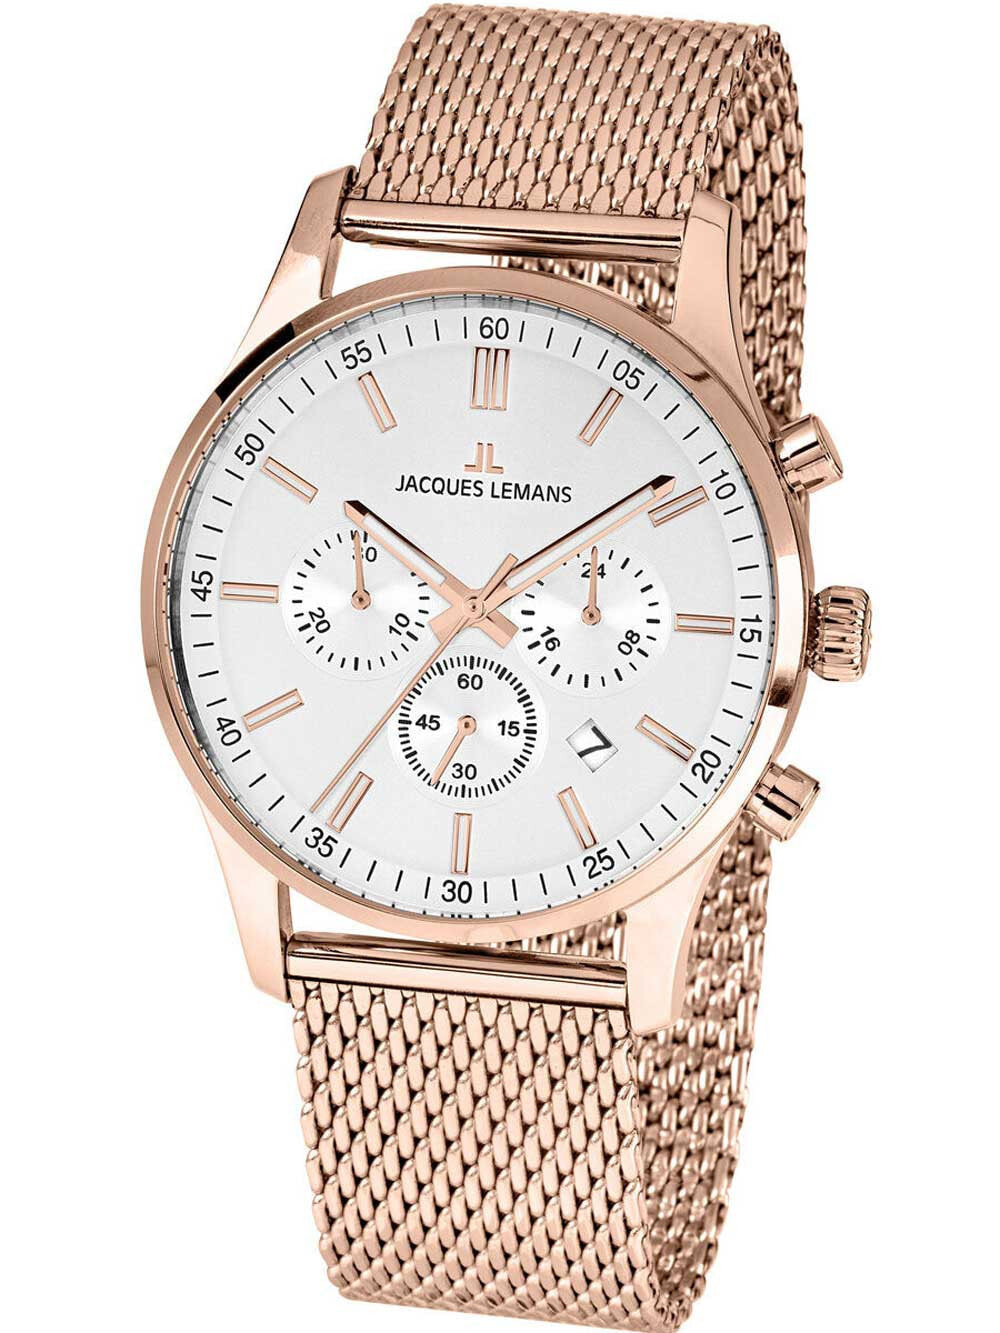 Мужские наручные часы с золотым браслетом Jacques Lemans 1-2025J London chrono 42 mm 10ATM